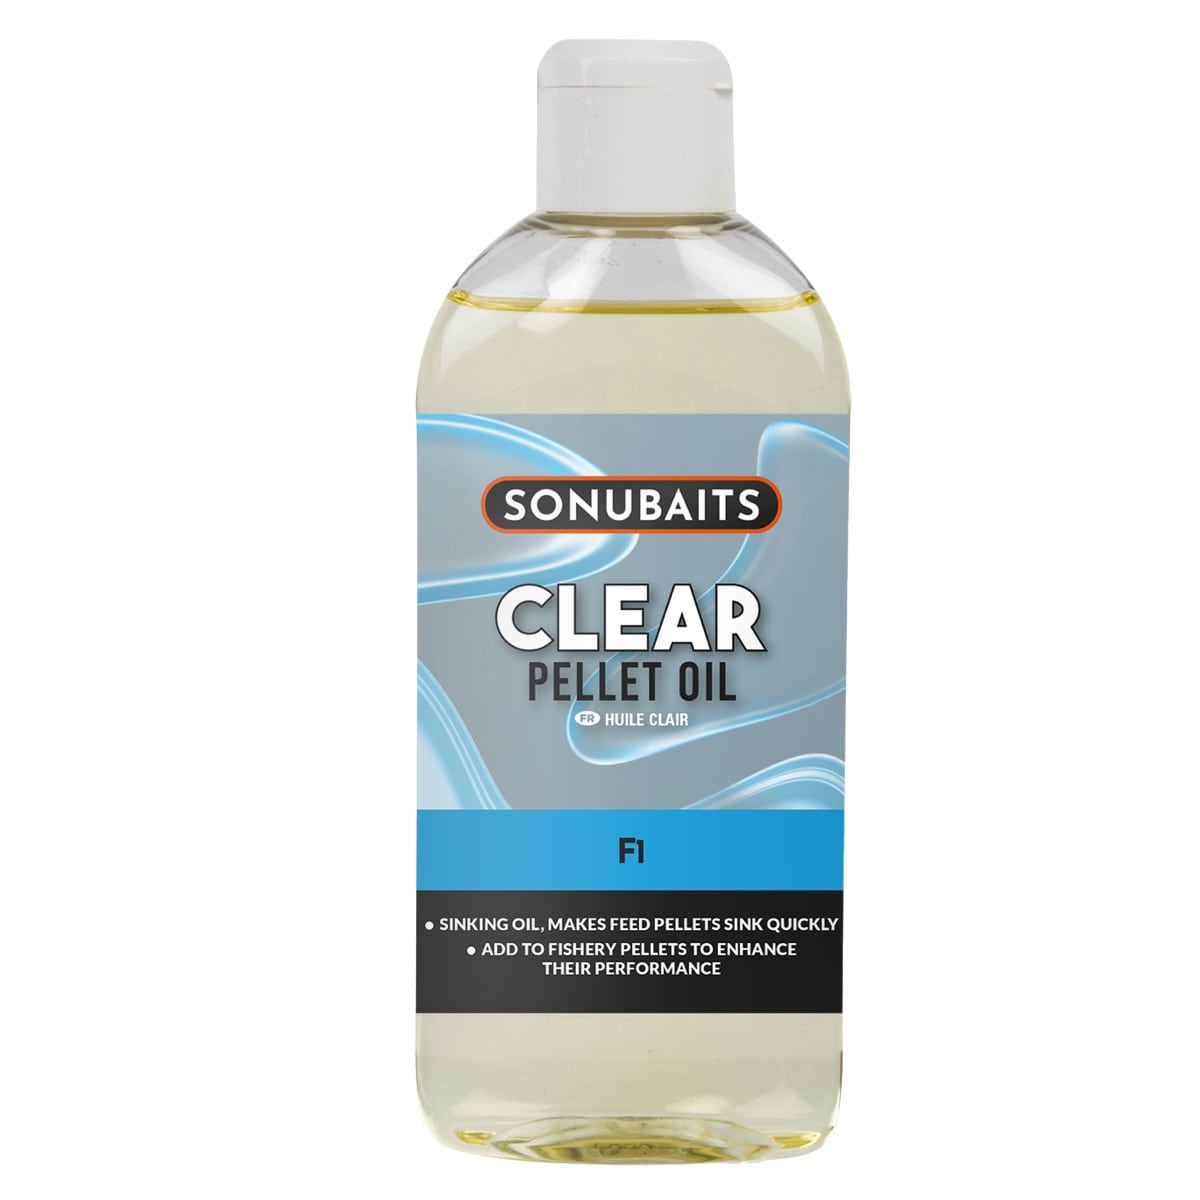 Sonubaits clear pellet oil F1